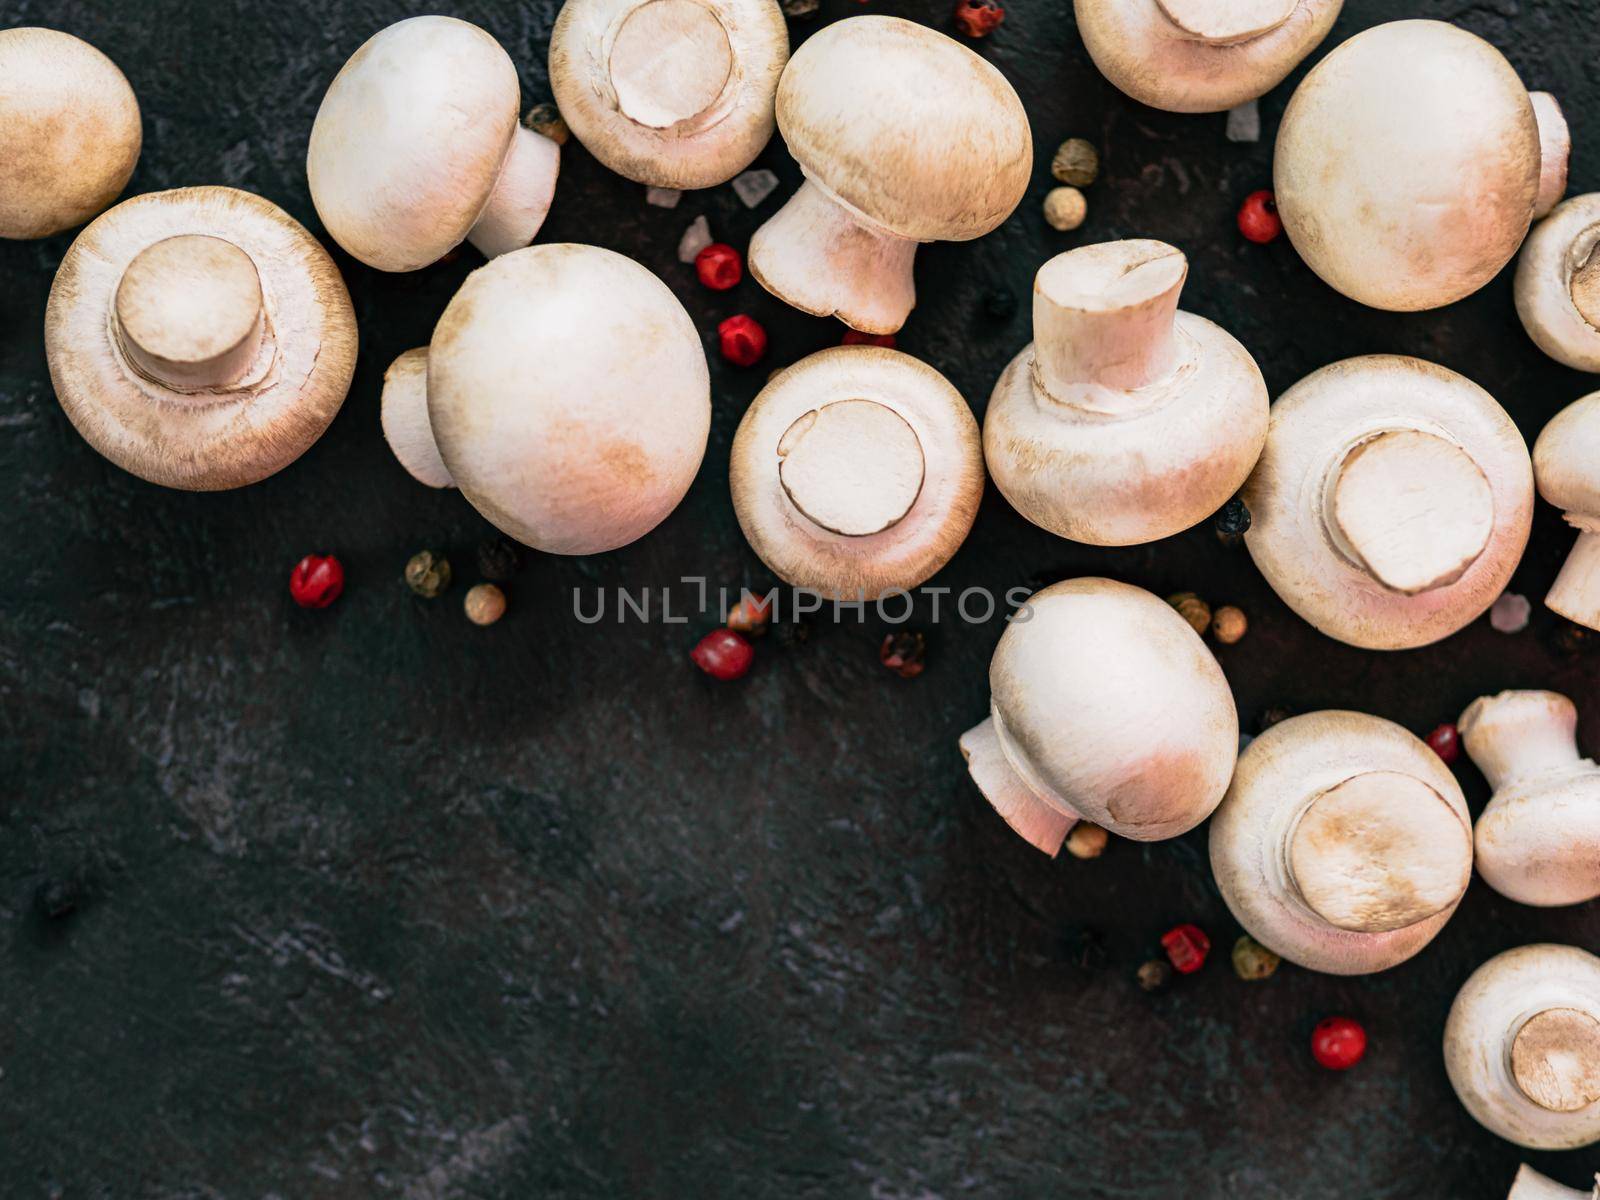 Mini champignons on black background, copy space by fascinadora